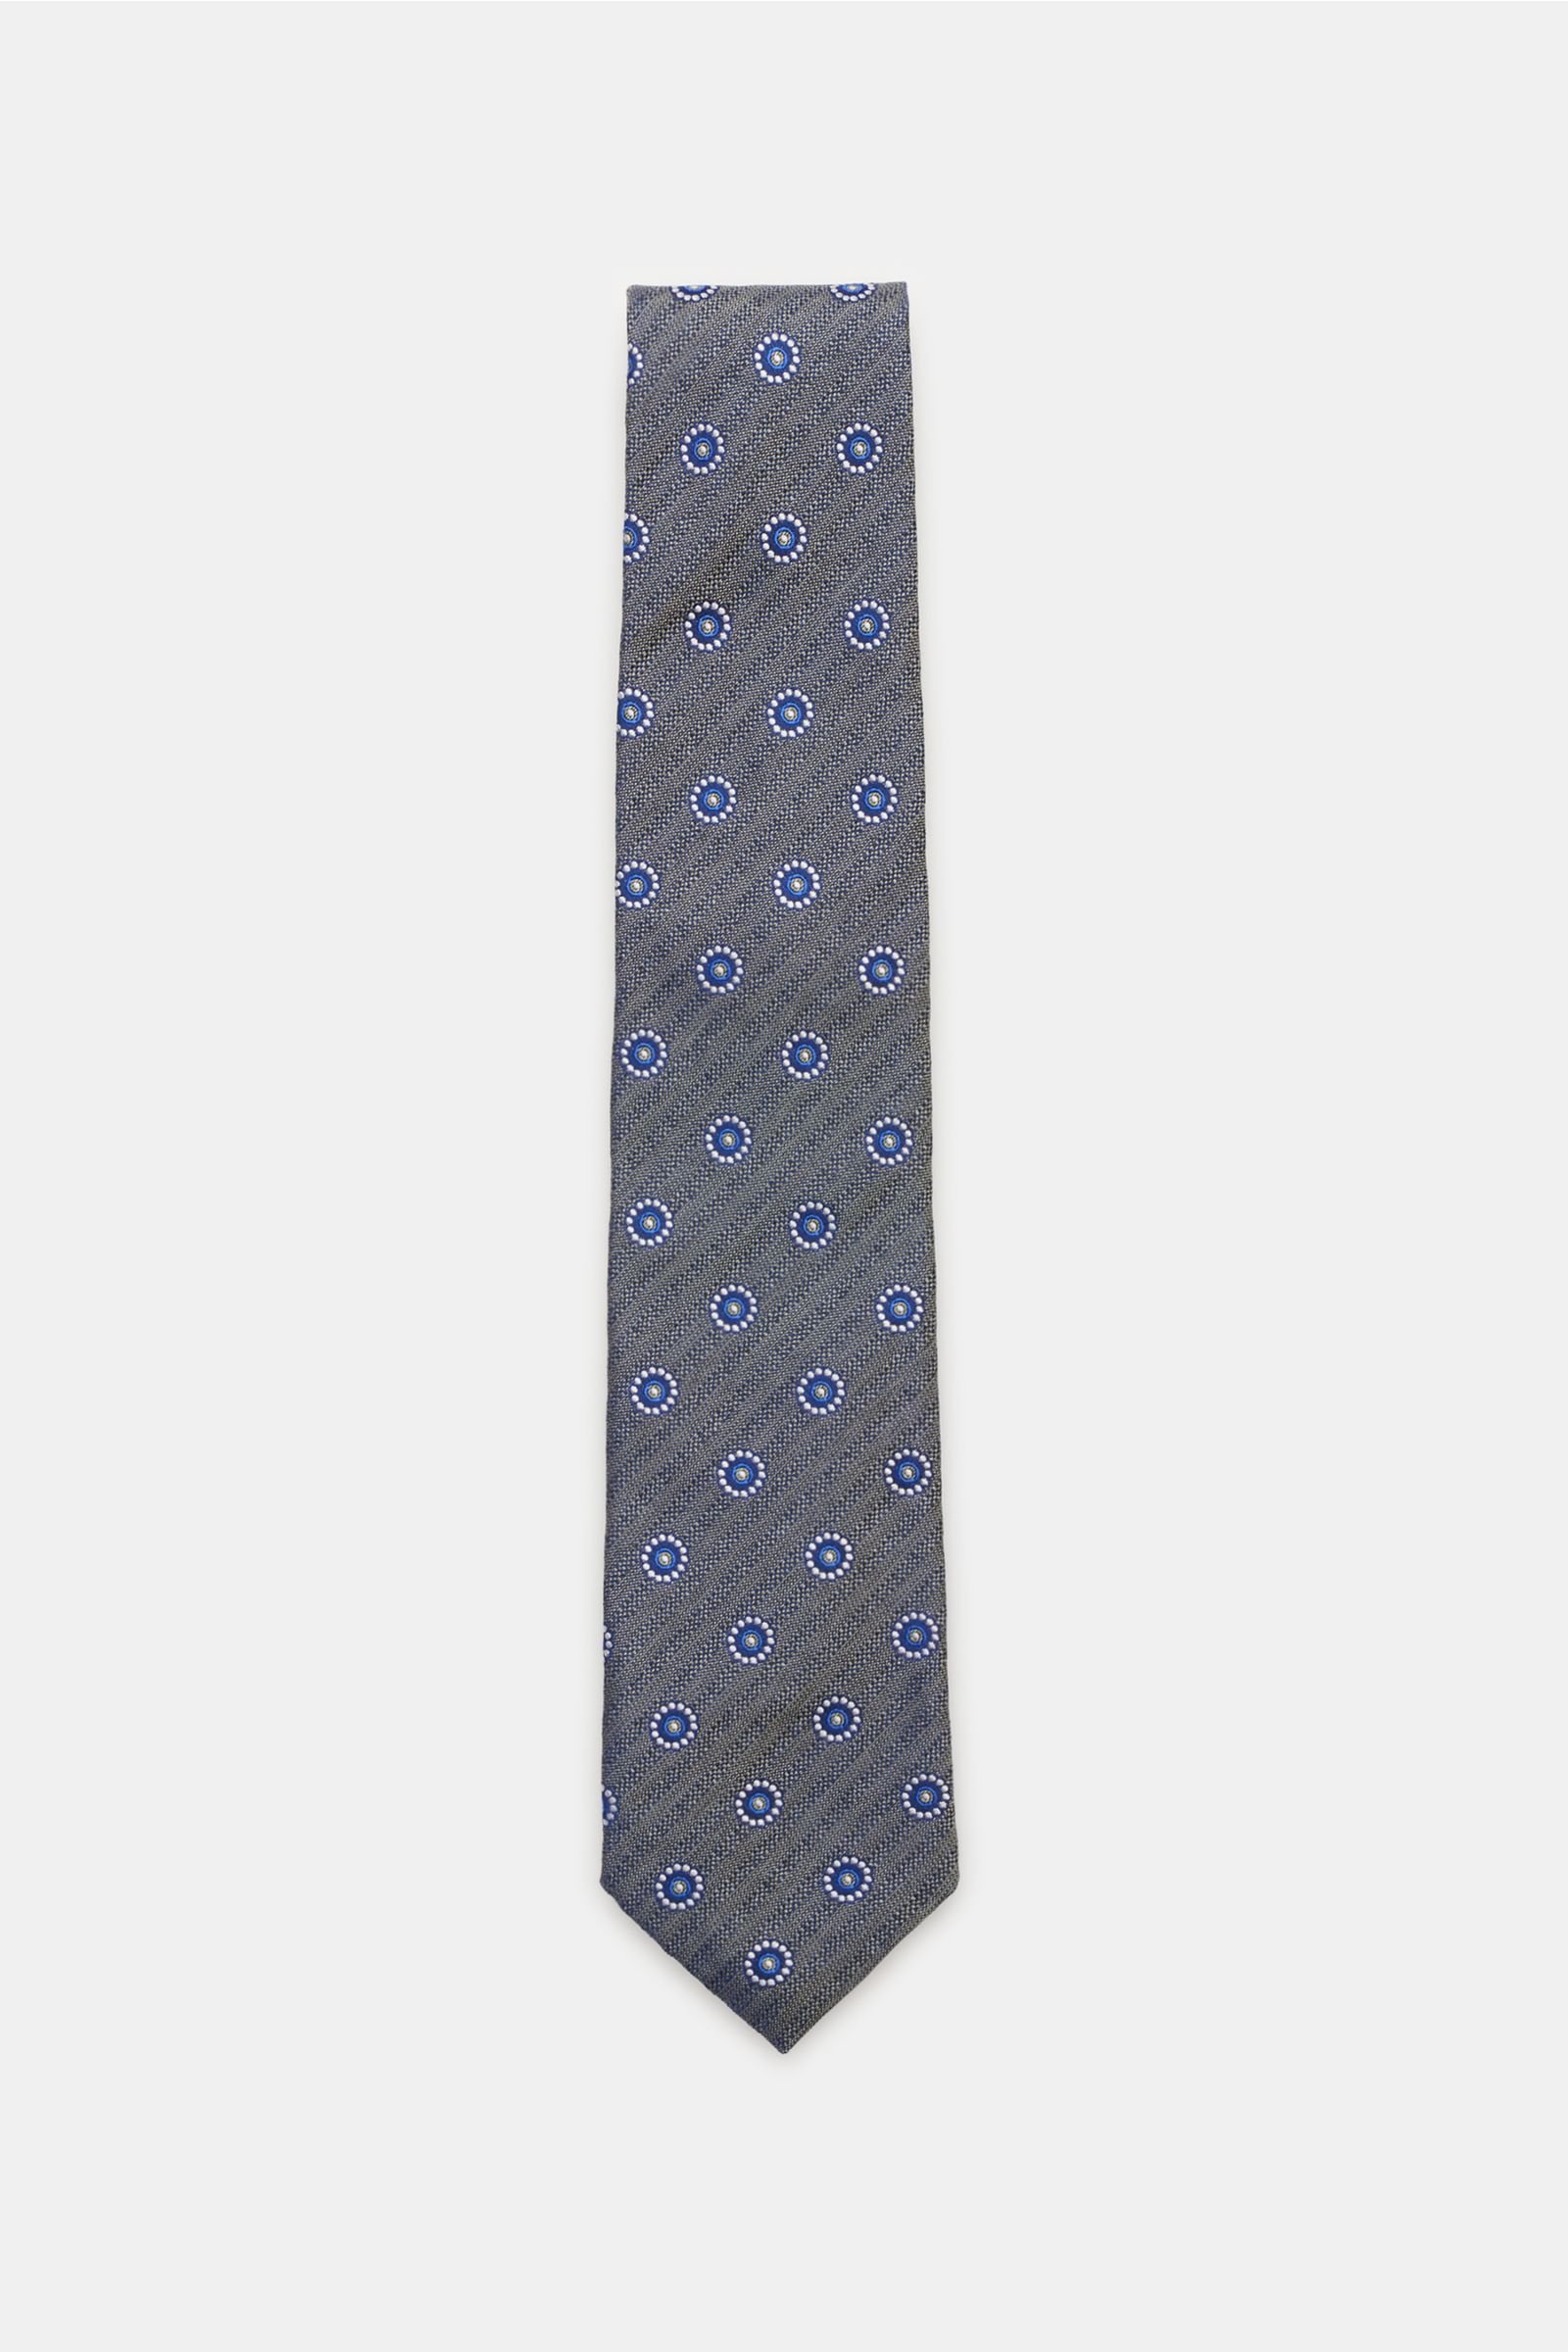 Silk tie olive/navy patterned